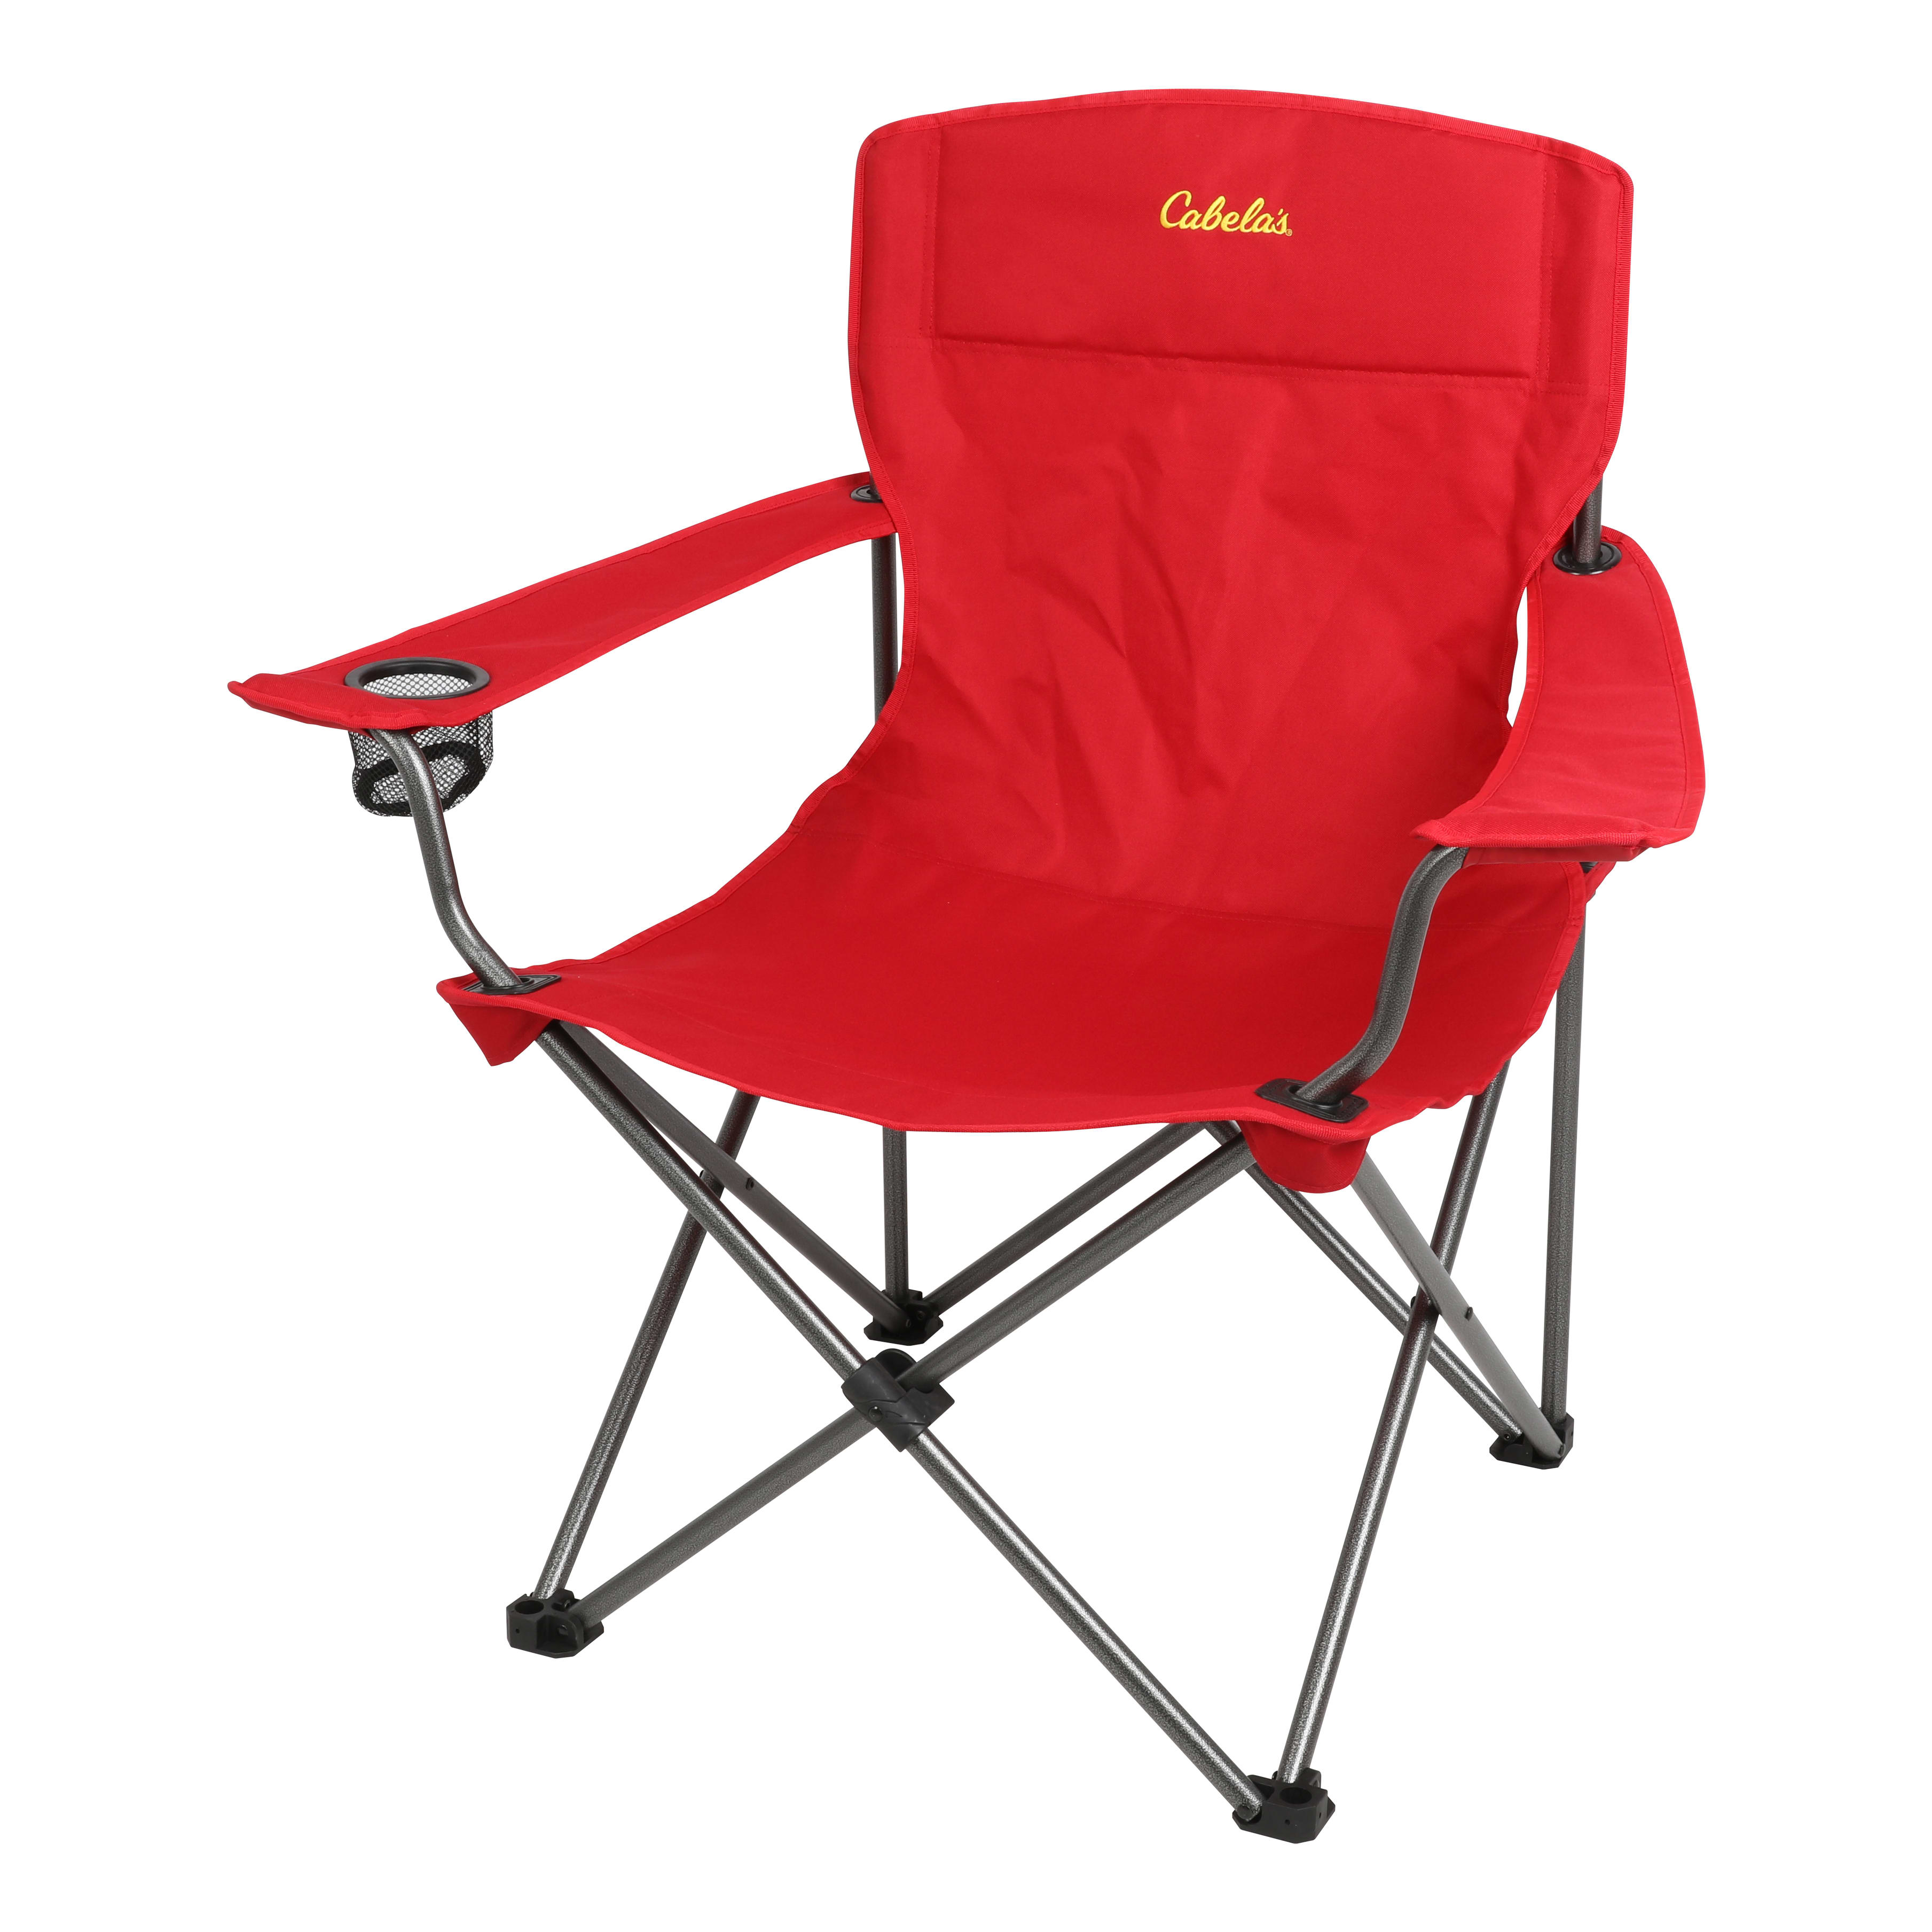 Cabela's Big Boy Chair - Red